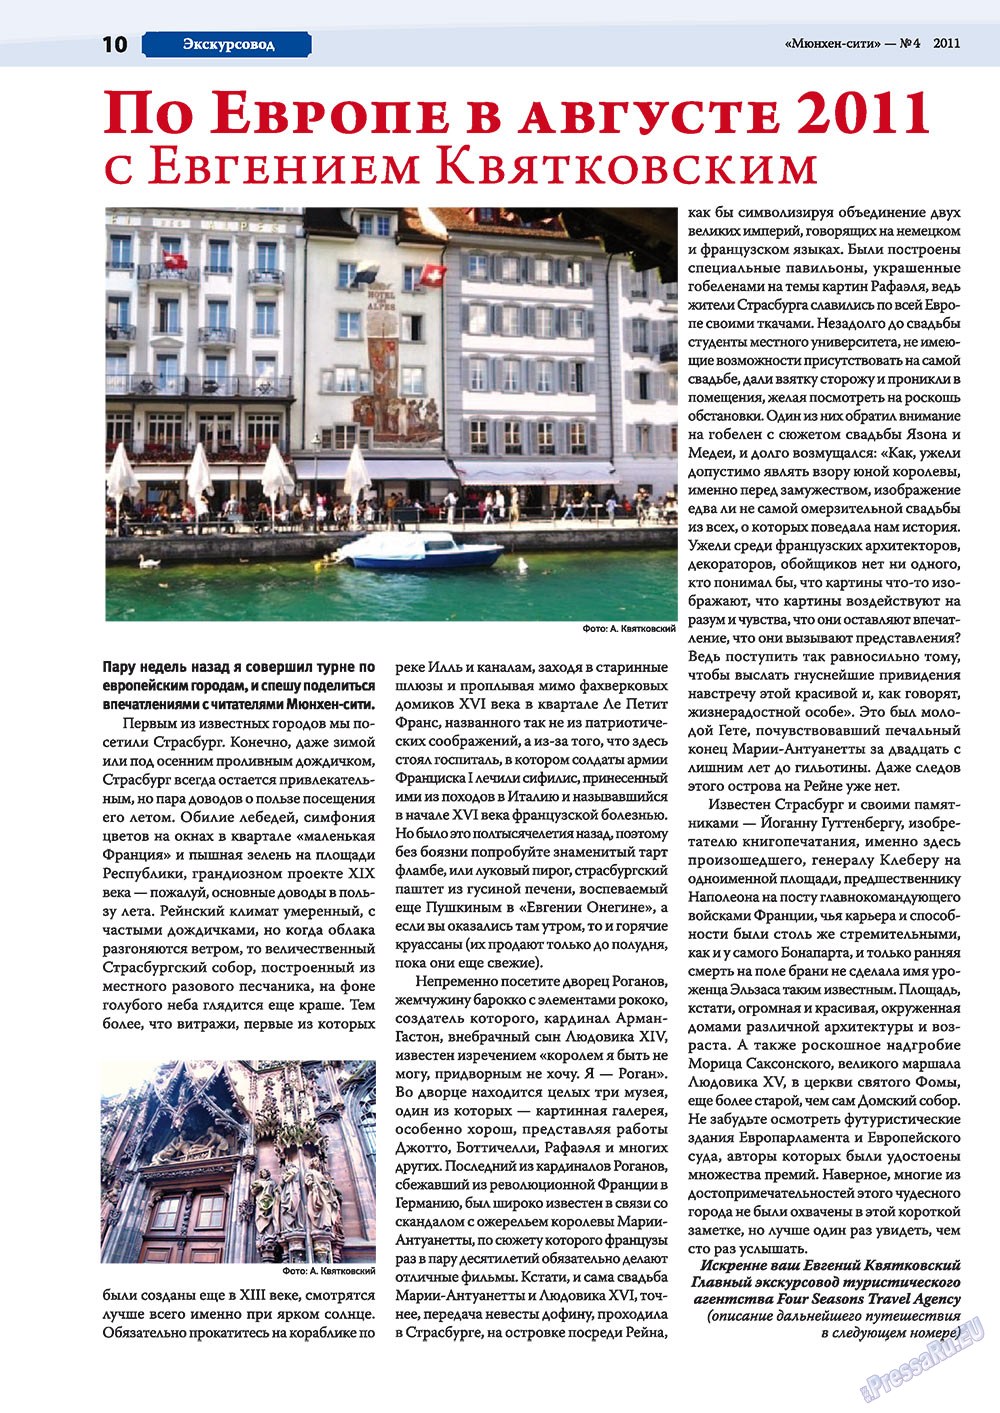 Мюнхен-сити, журнал. 2011 №4 стр.10